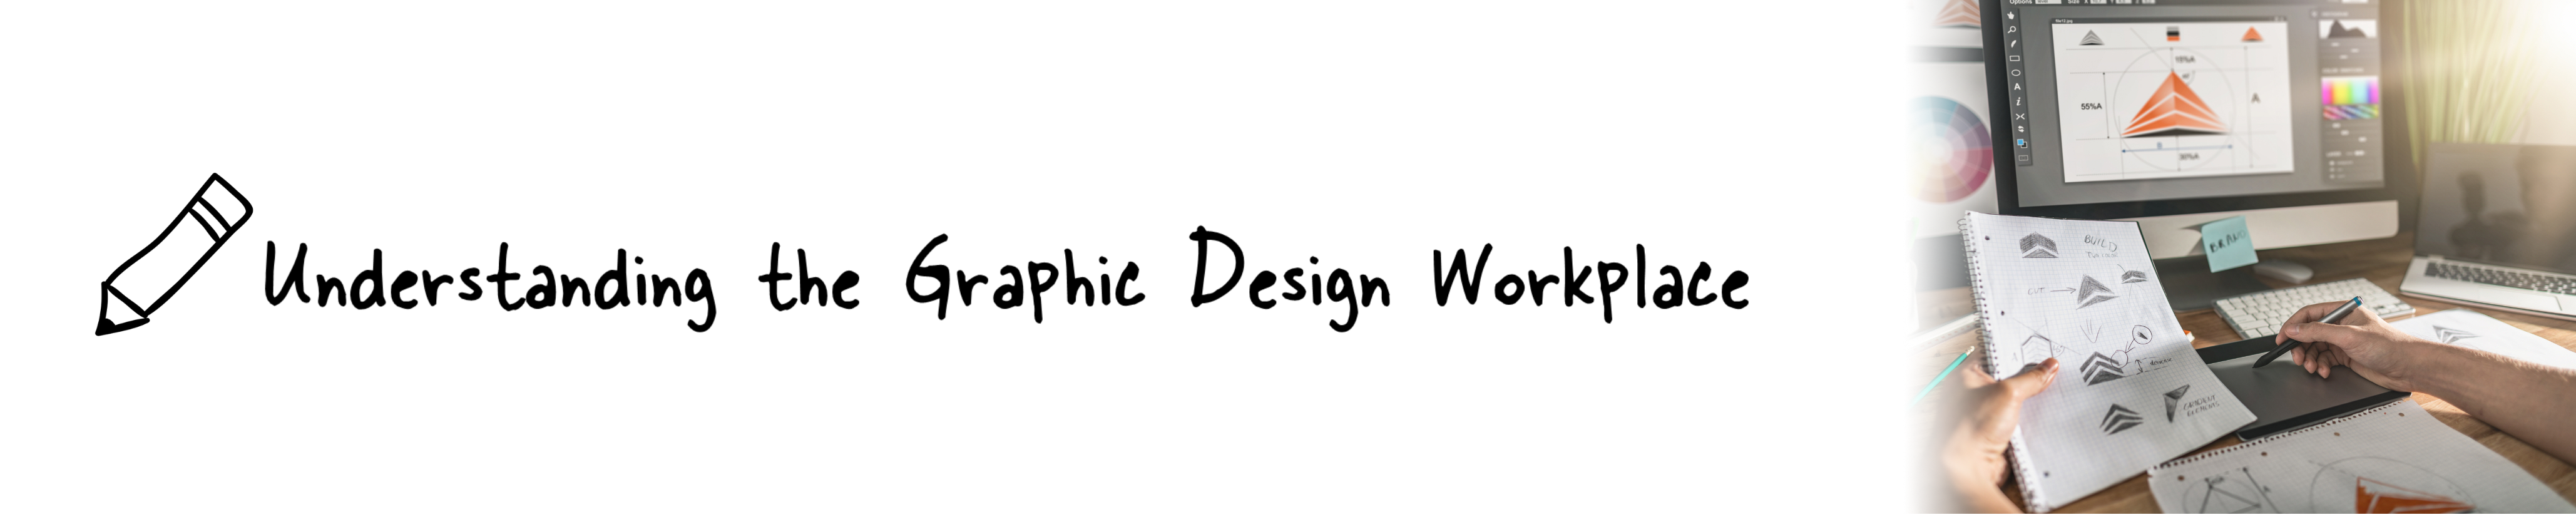 Understanding the Graphic Design Workplace 